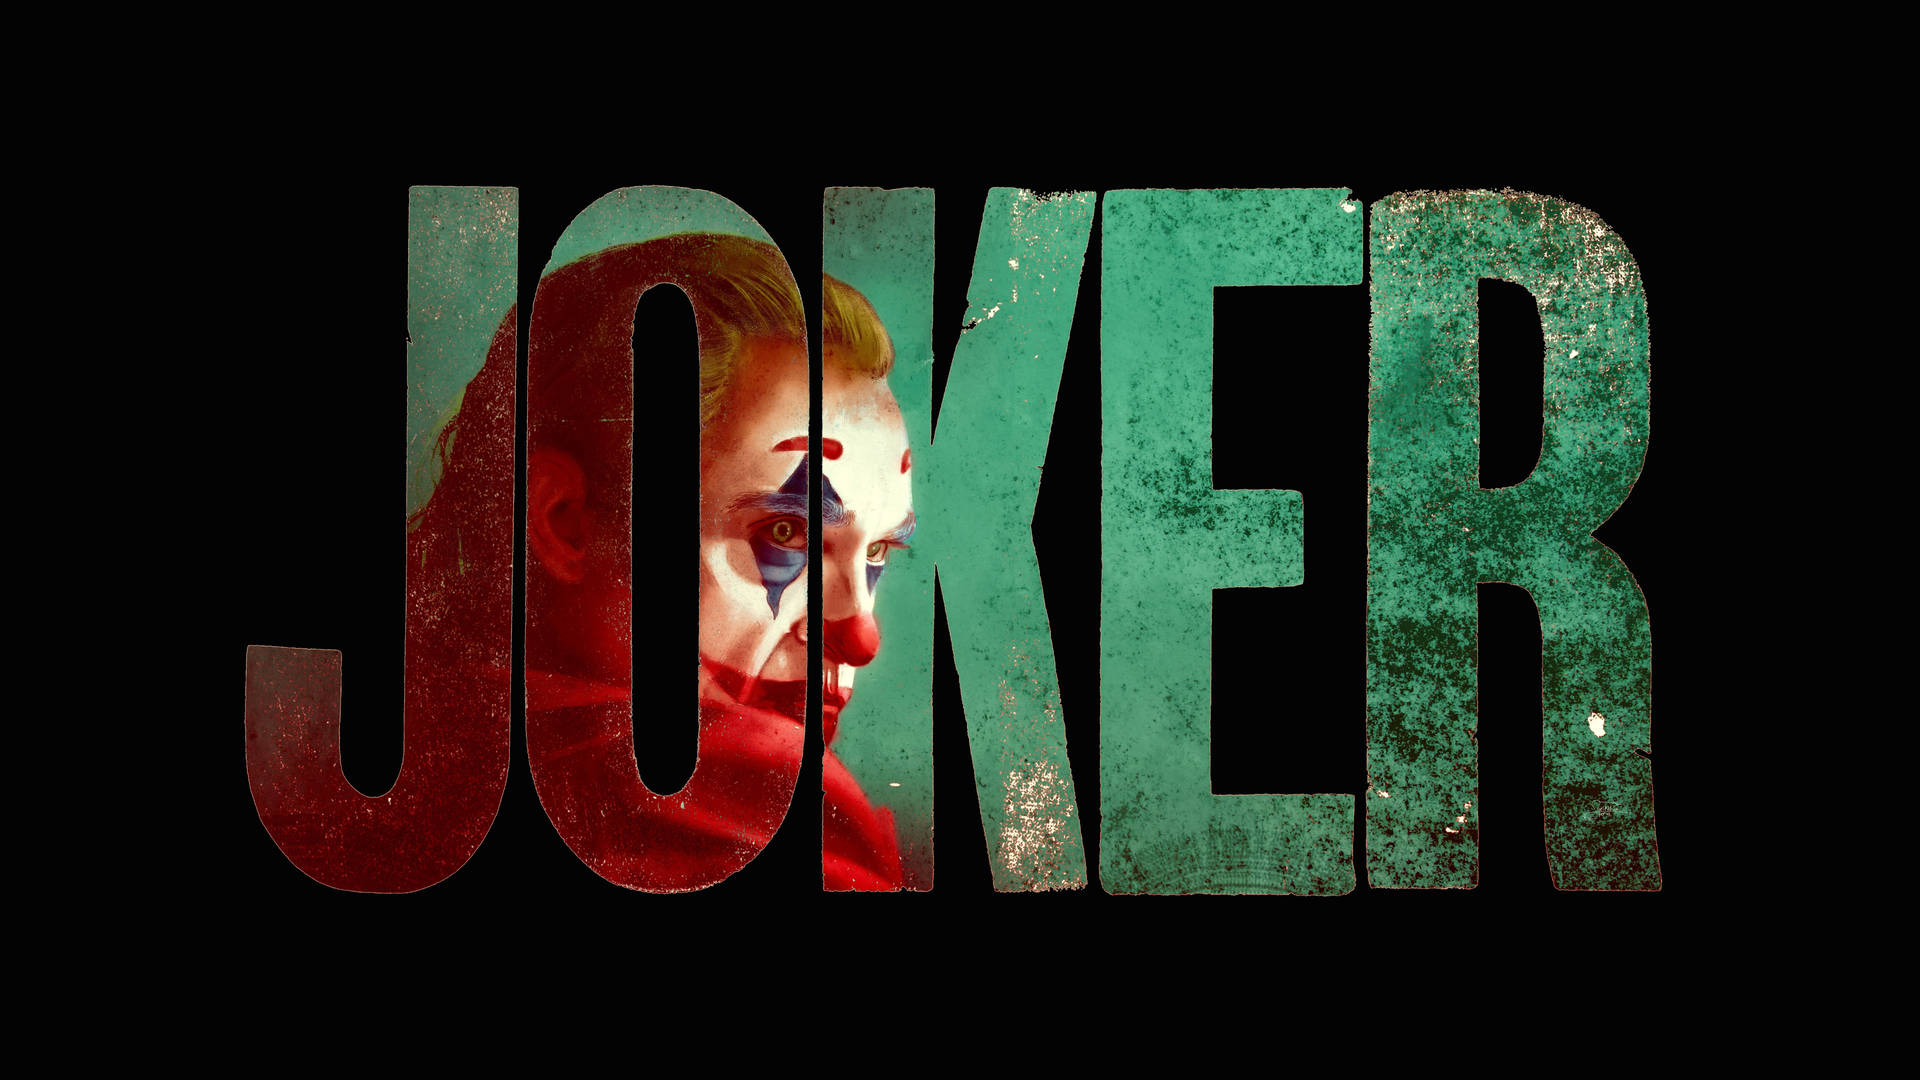 Black Ultra Hd Joker Poster